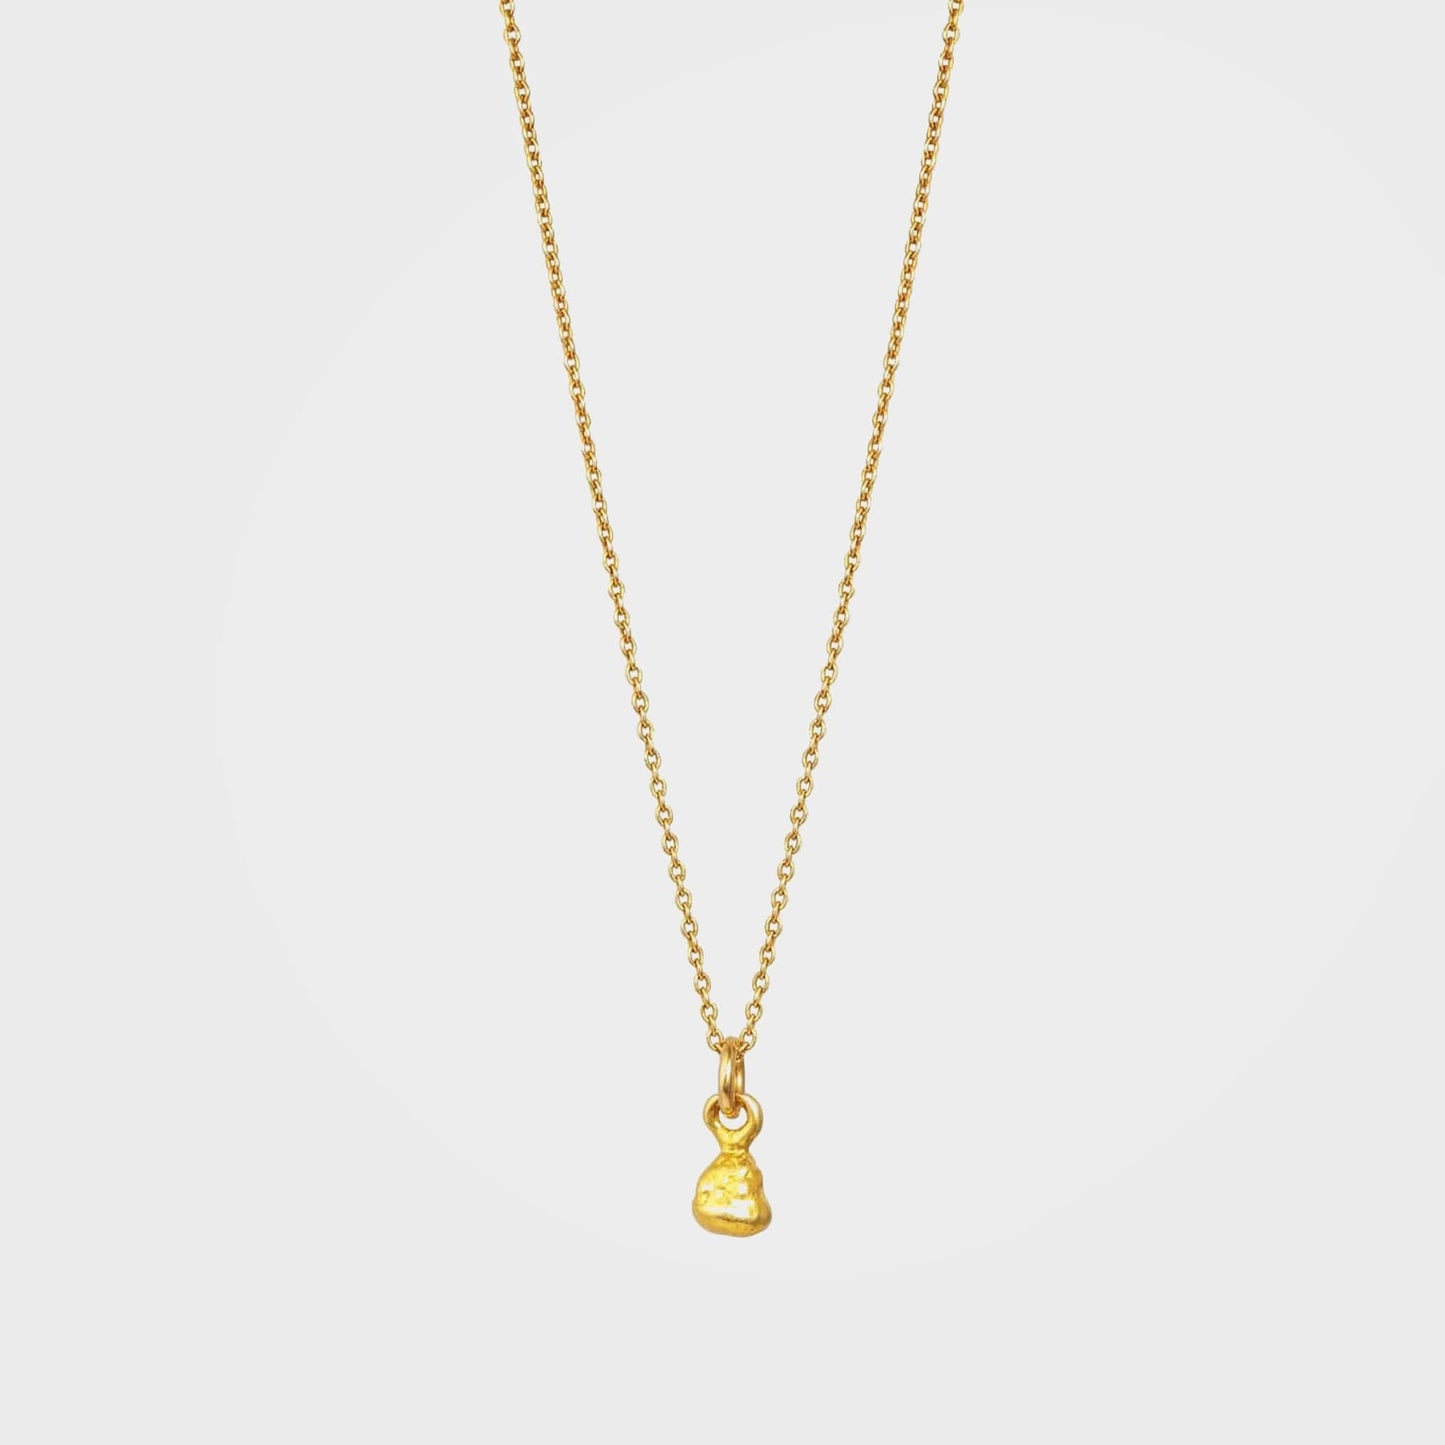 Organic Teardrop Necklace, Tara - Gold | By Lunar James